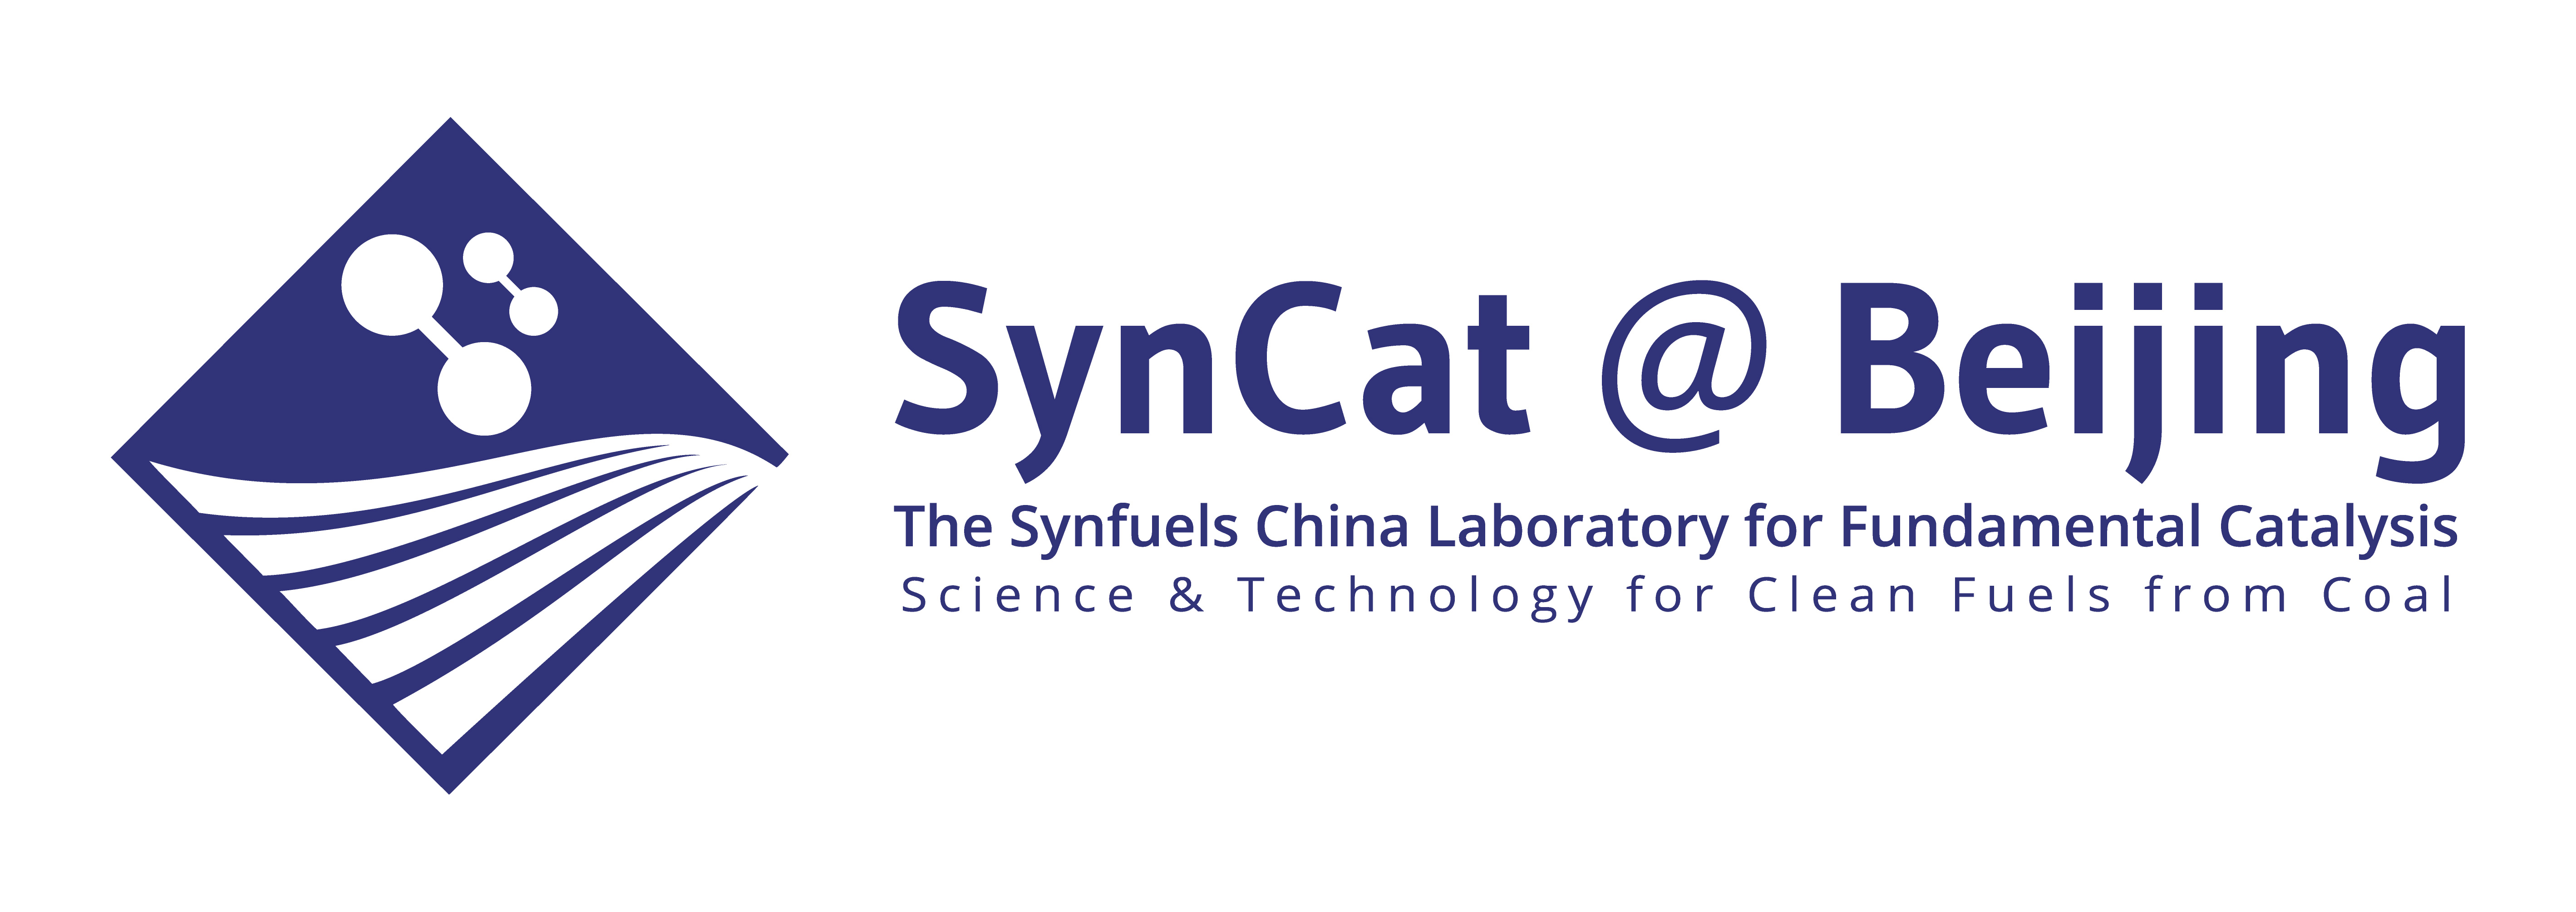 SynCat @ Beijing